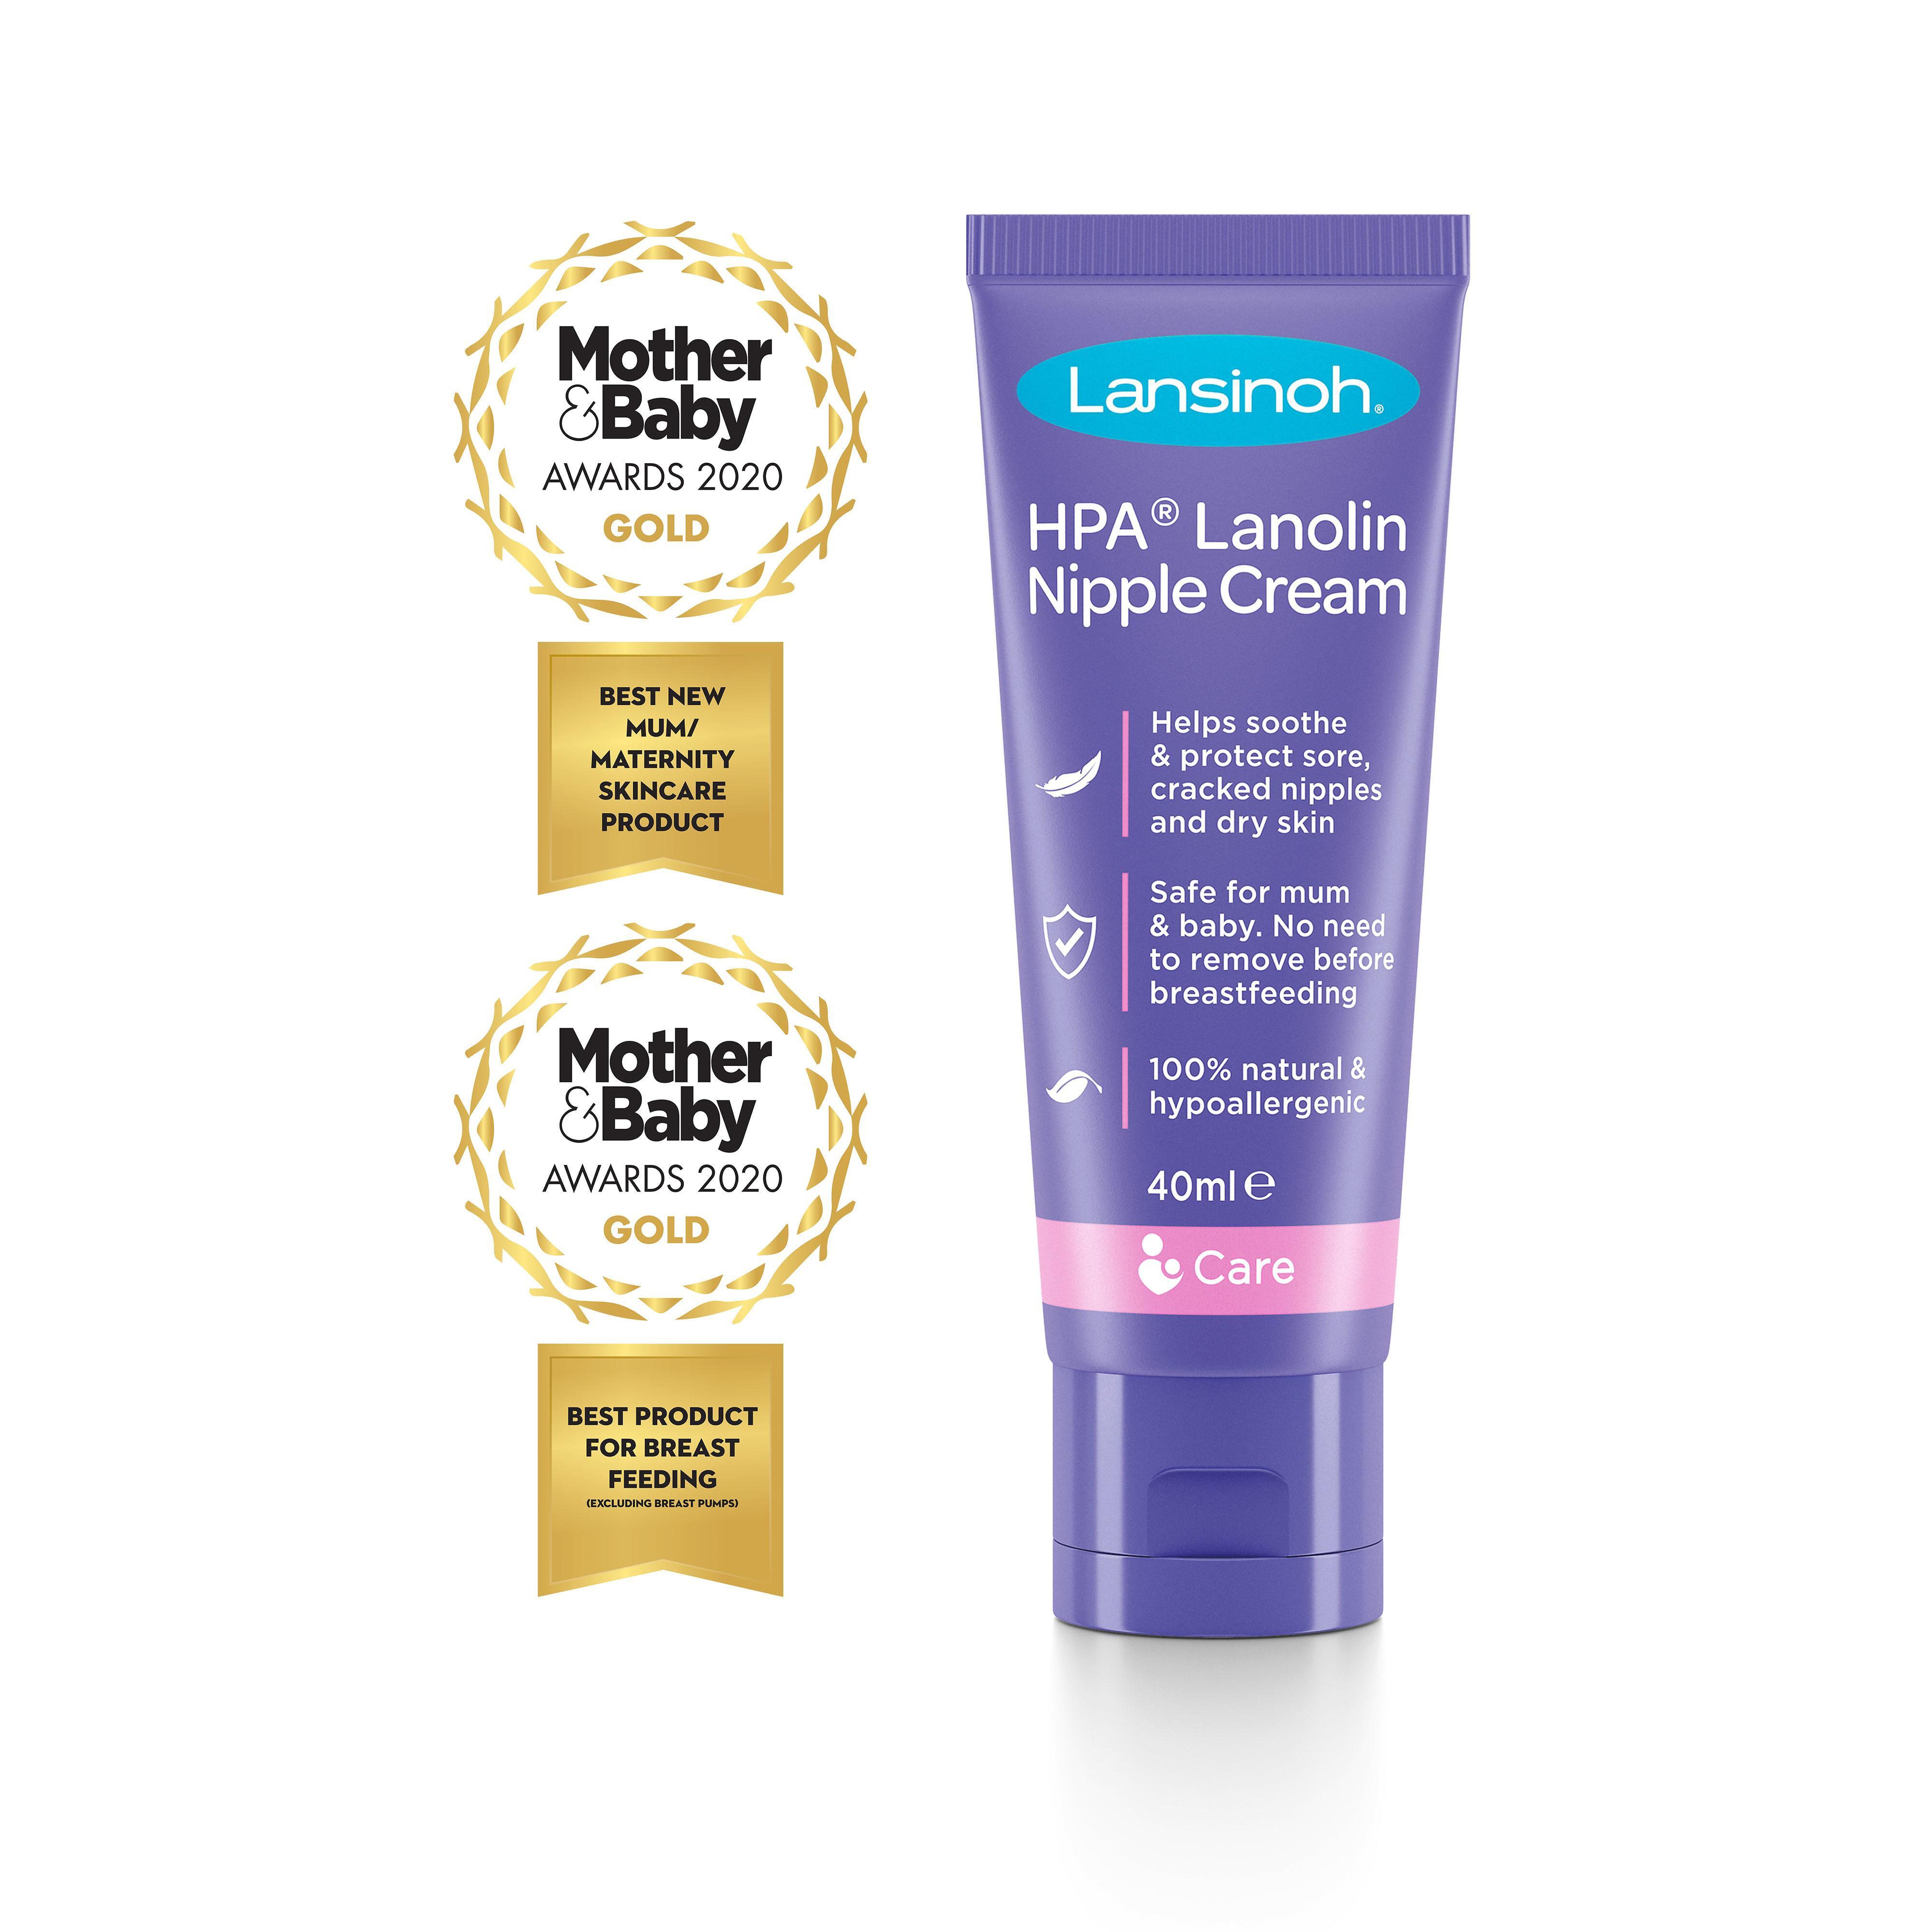 https://www.nordbaby.com/products/images/g120000/121145/creams-lansinoh-violet-lansinoh-hpa-lanolin-for-sore-nipples-cracked-skin-40ml-121145-47386.jpg